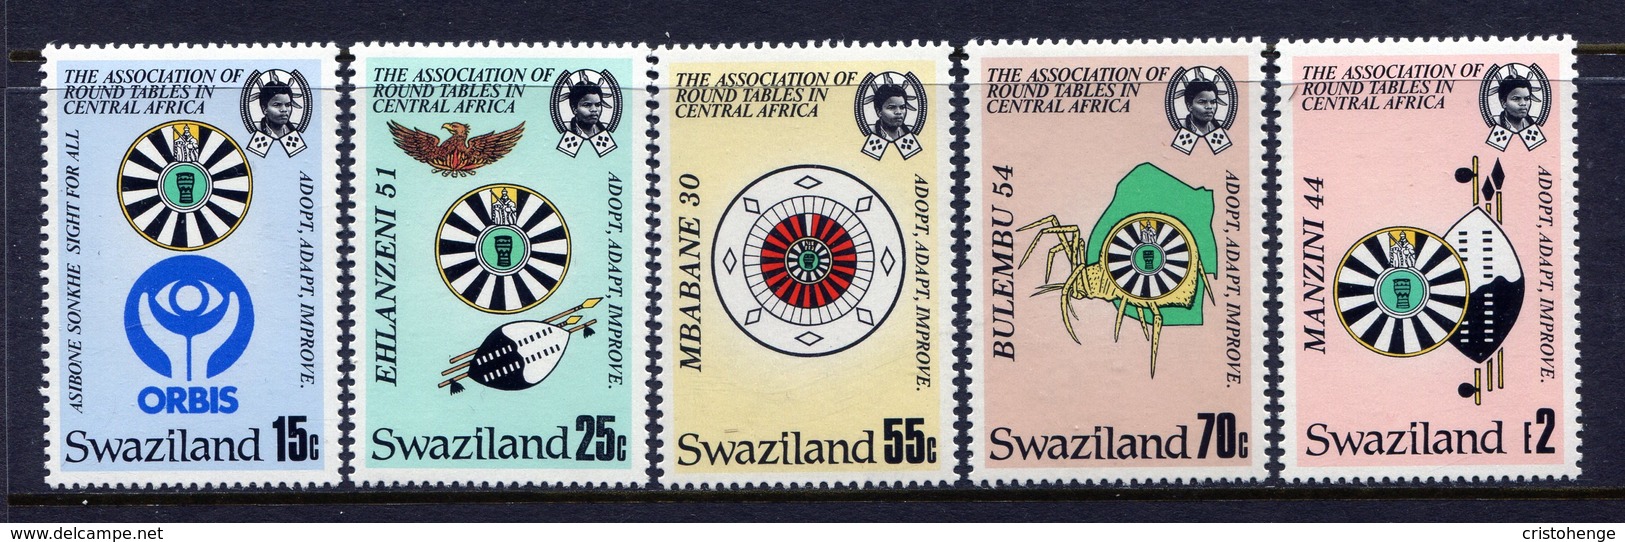 Swaziland 1986 50th Anniversary Of Round Table Organization Set MNH (SG 511-515) - Swaziland (1968-...)